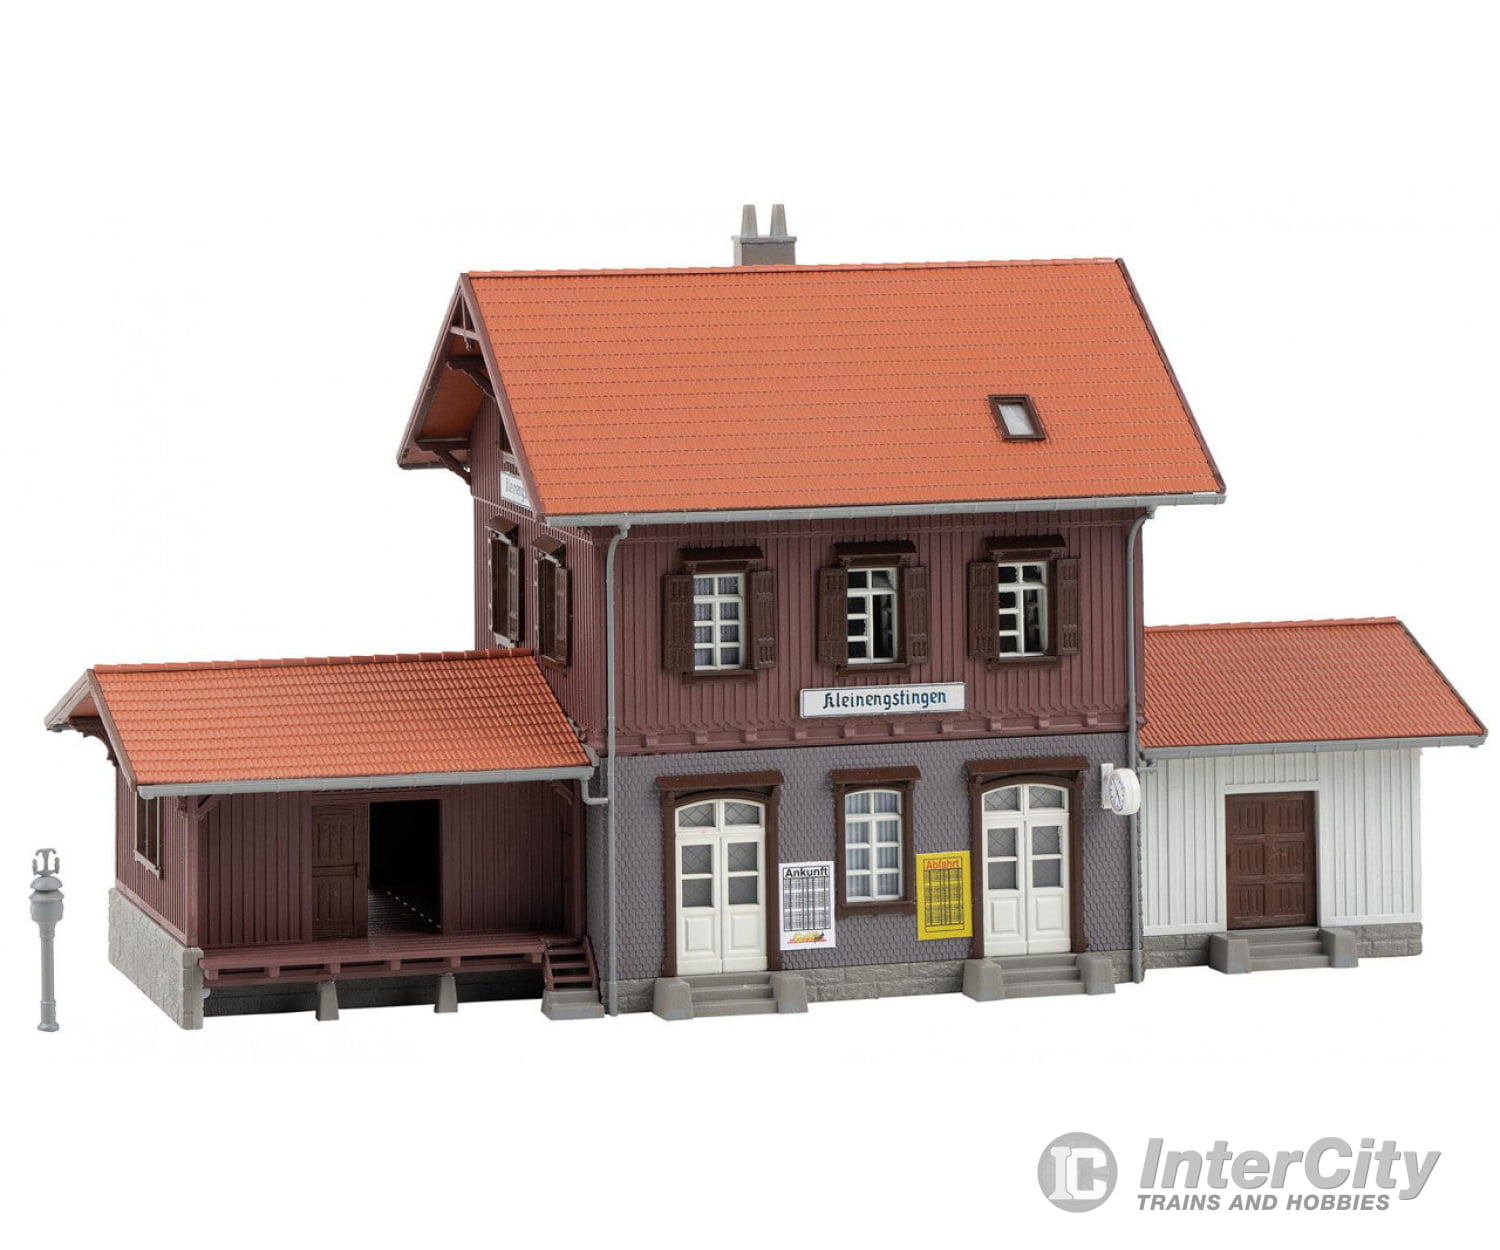 Faller 110133 Ho Kleinengstingen Railway Station Structures